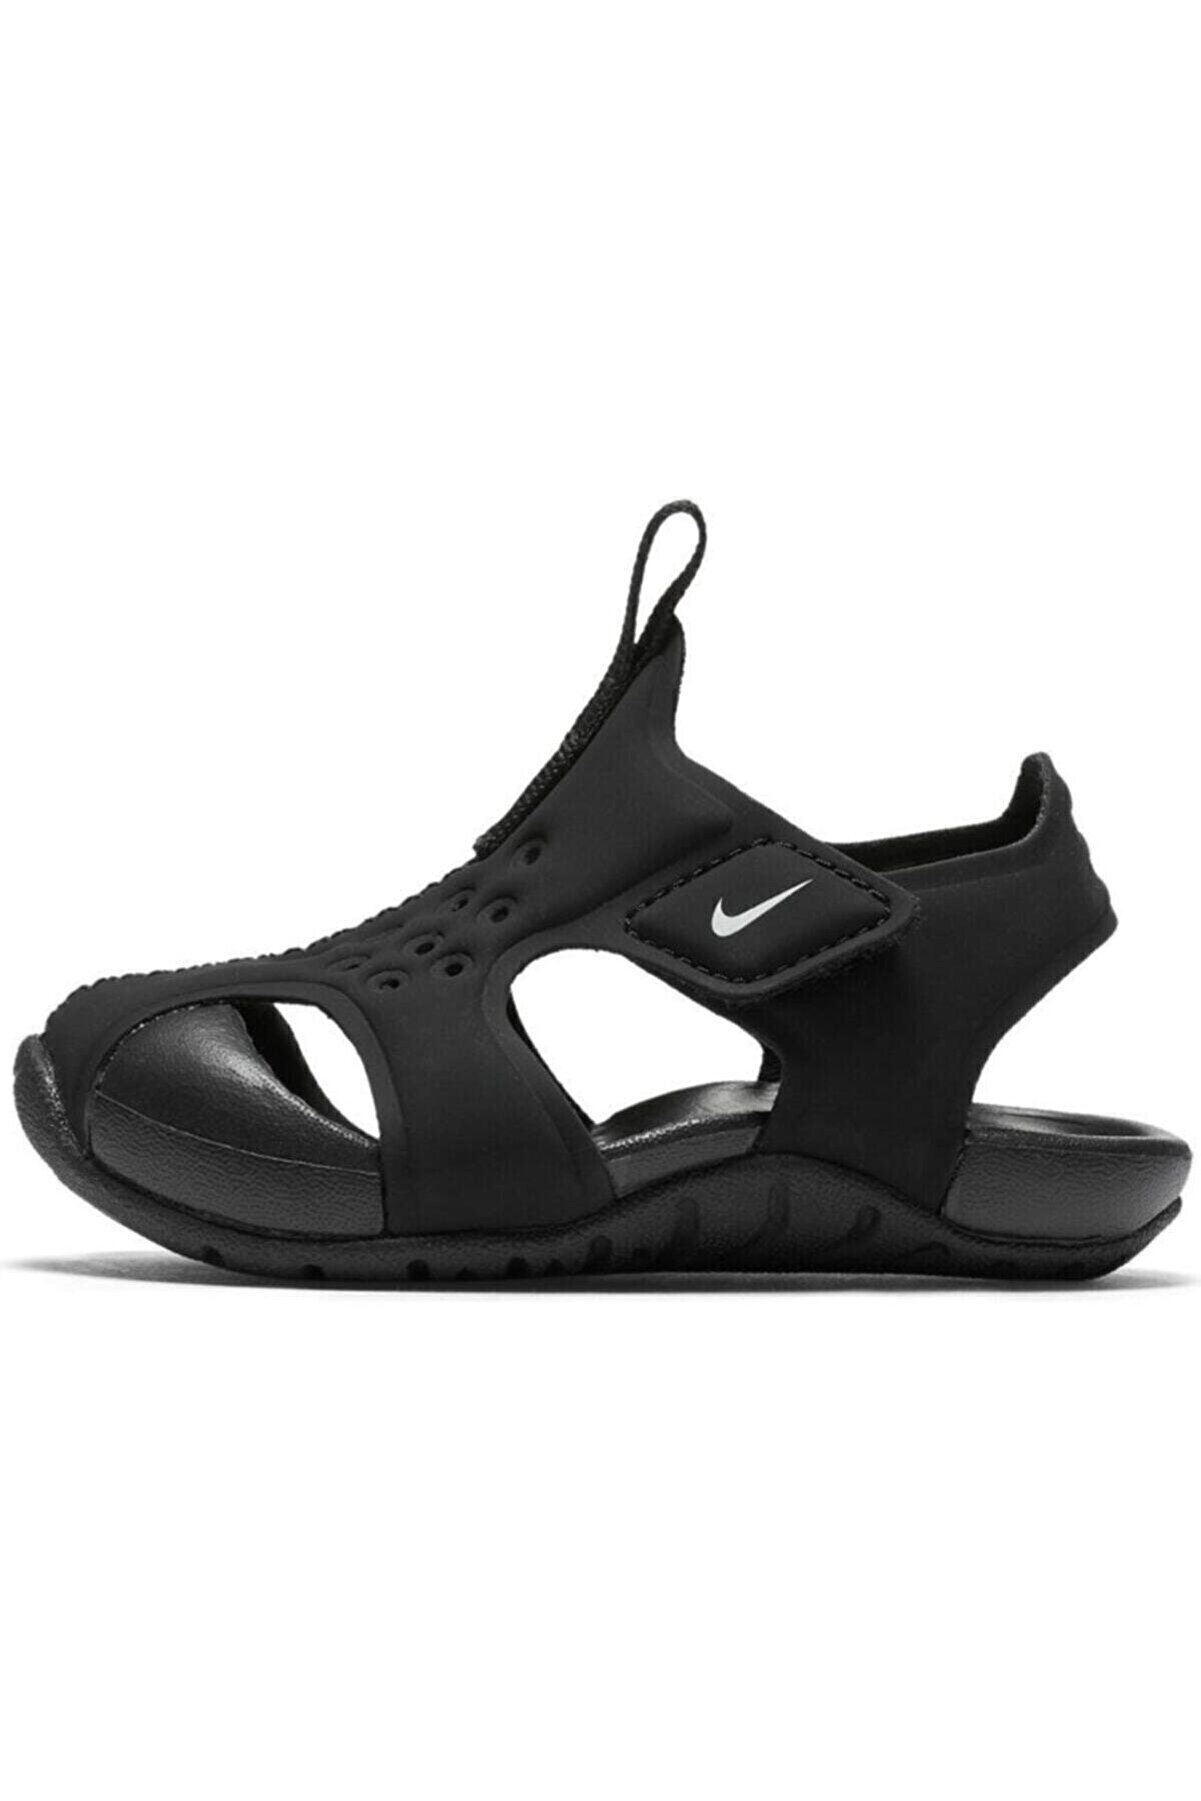 Nike Sunray Protect 2 Çocuk Sandalet 943827-001